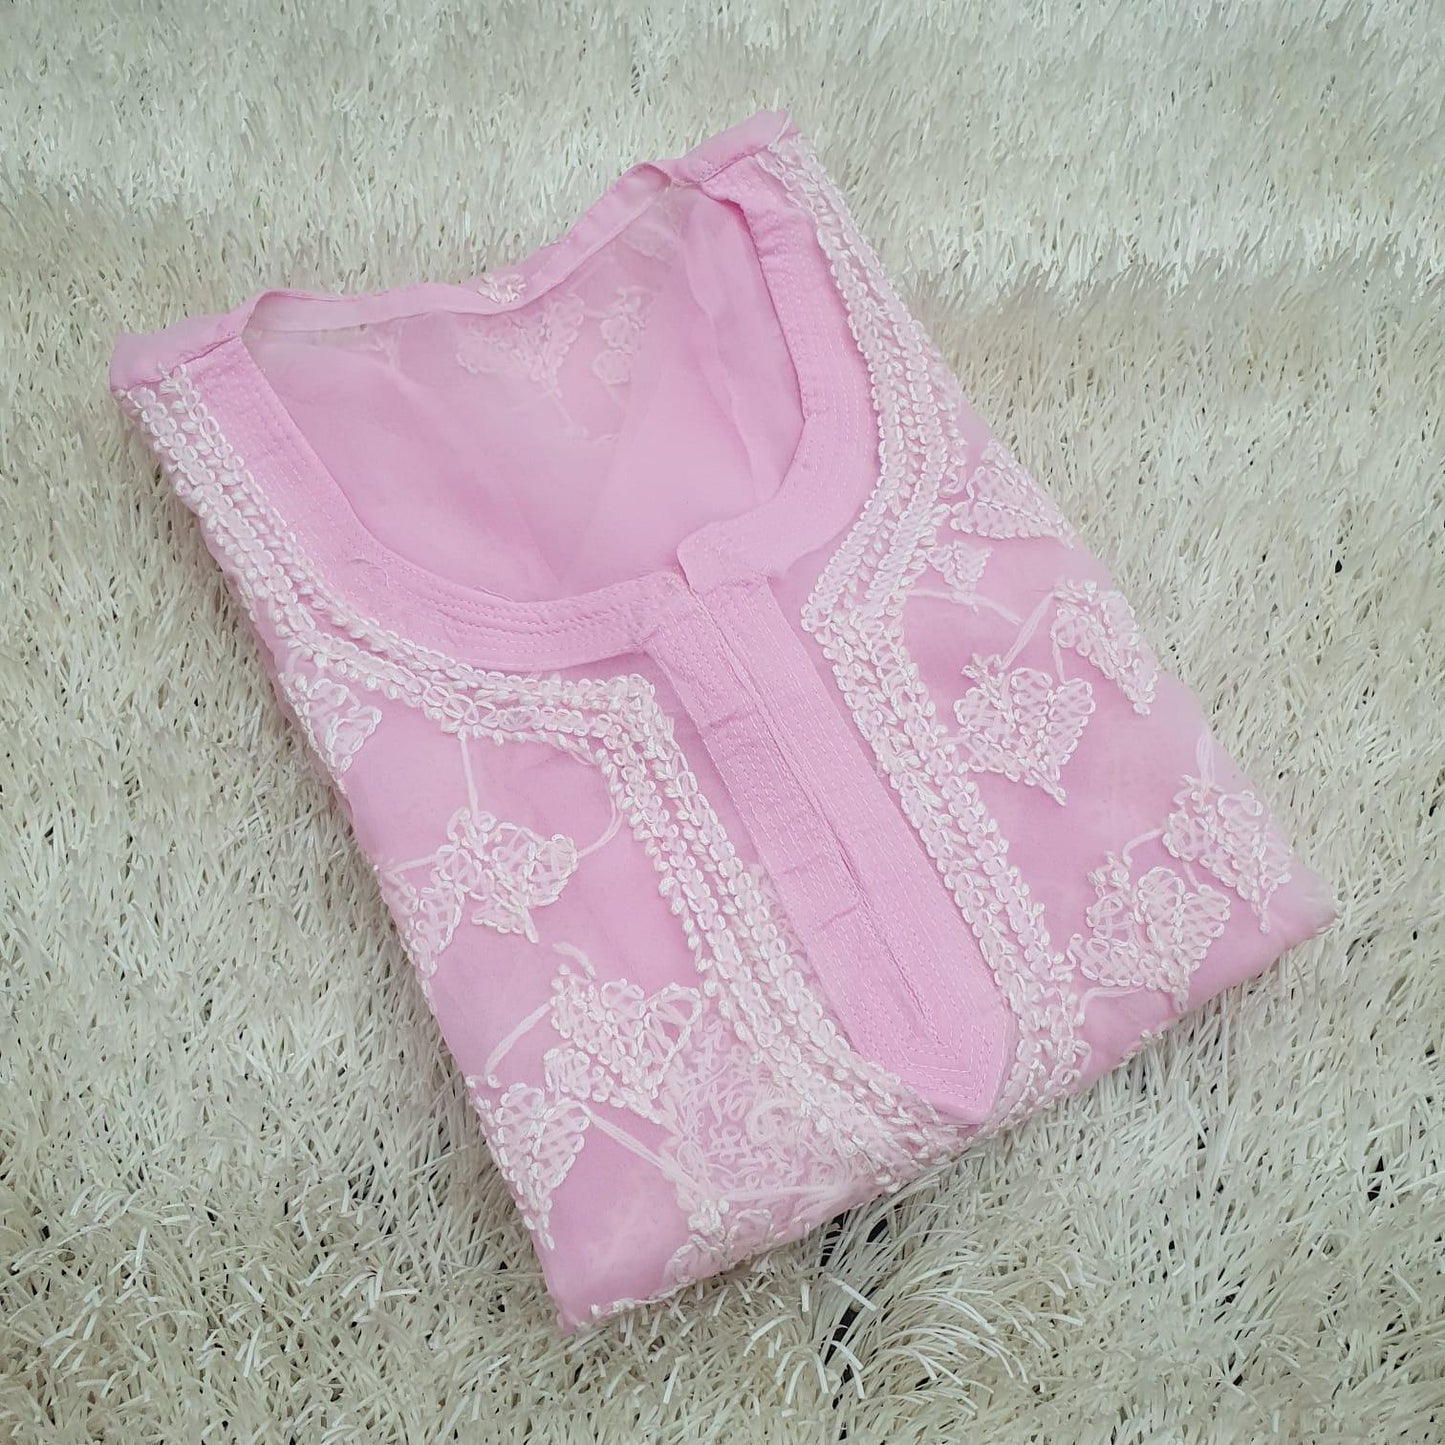 Pink Chikankari Elegance: Long Chiffon Kurti Set - Inayakhan Shop 